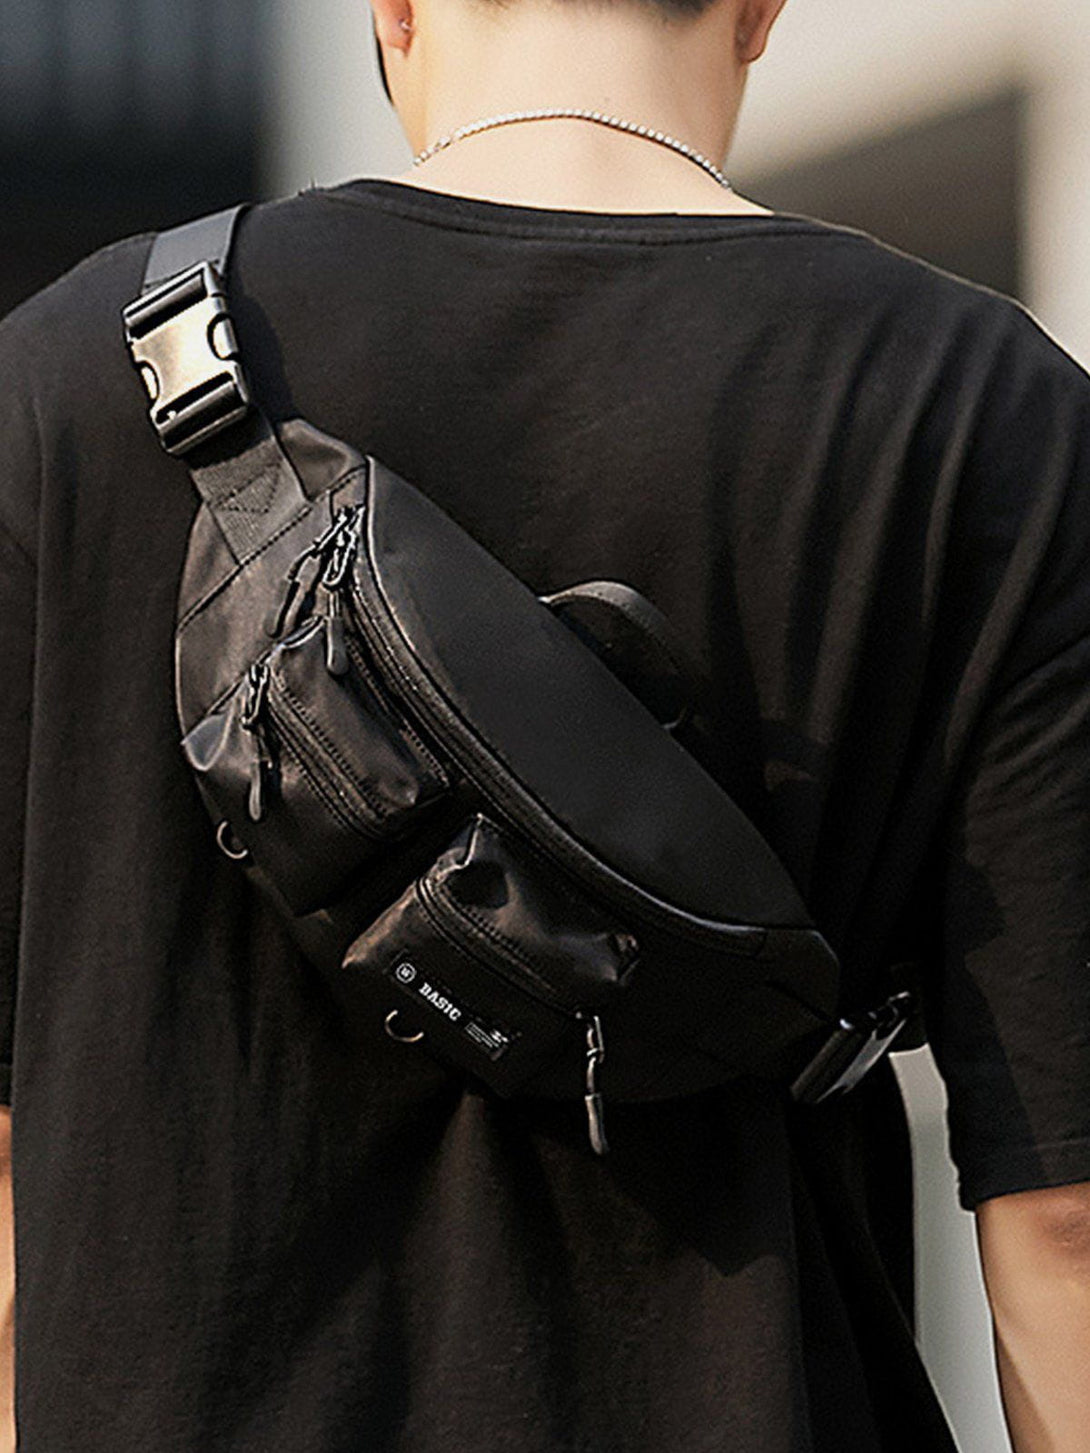 Majesda® - Functional Style Messenger Bag- Outfit Ideas - Streetwear Fashion - majesda.com